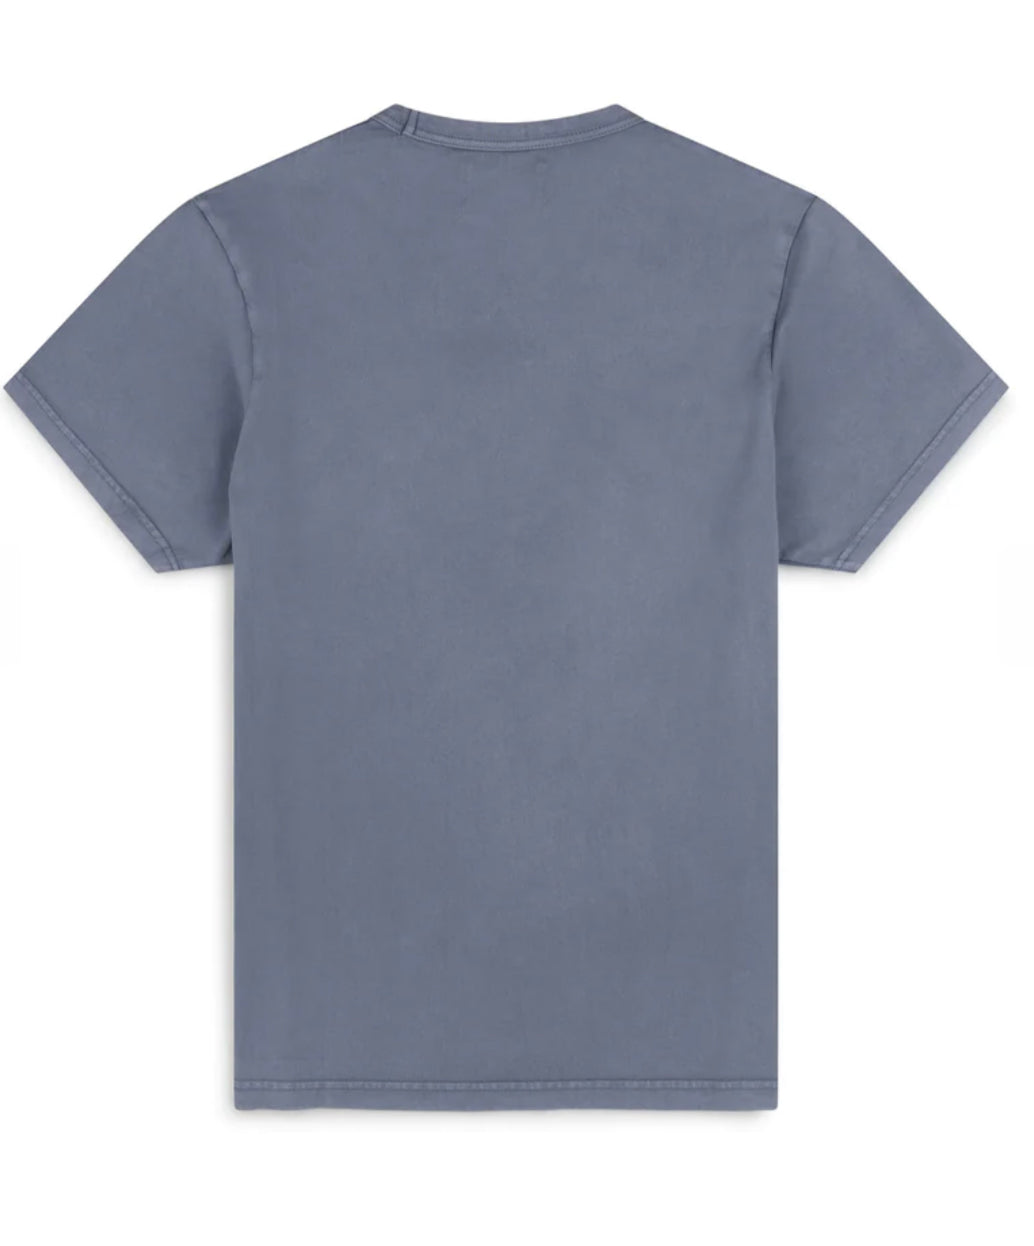 Admiral Sporting Goods Aylestone T-Shirt - Colman Blue Wash